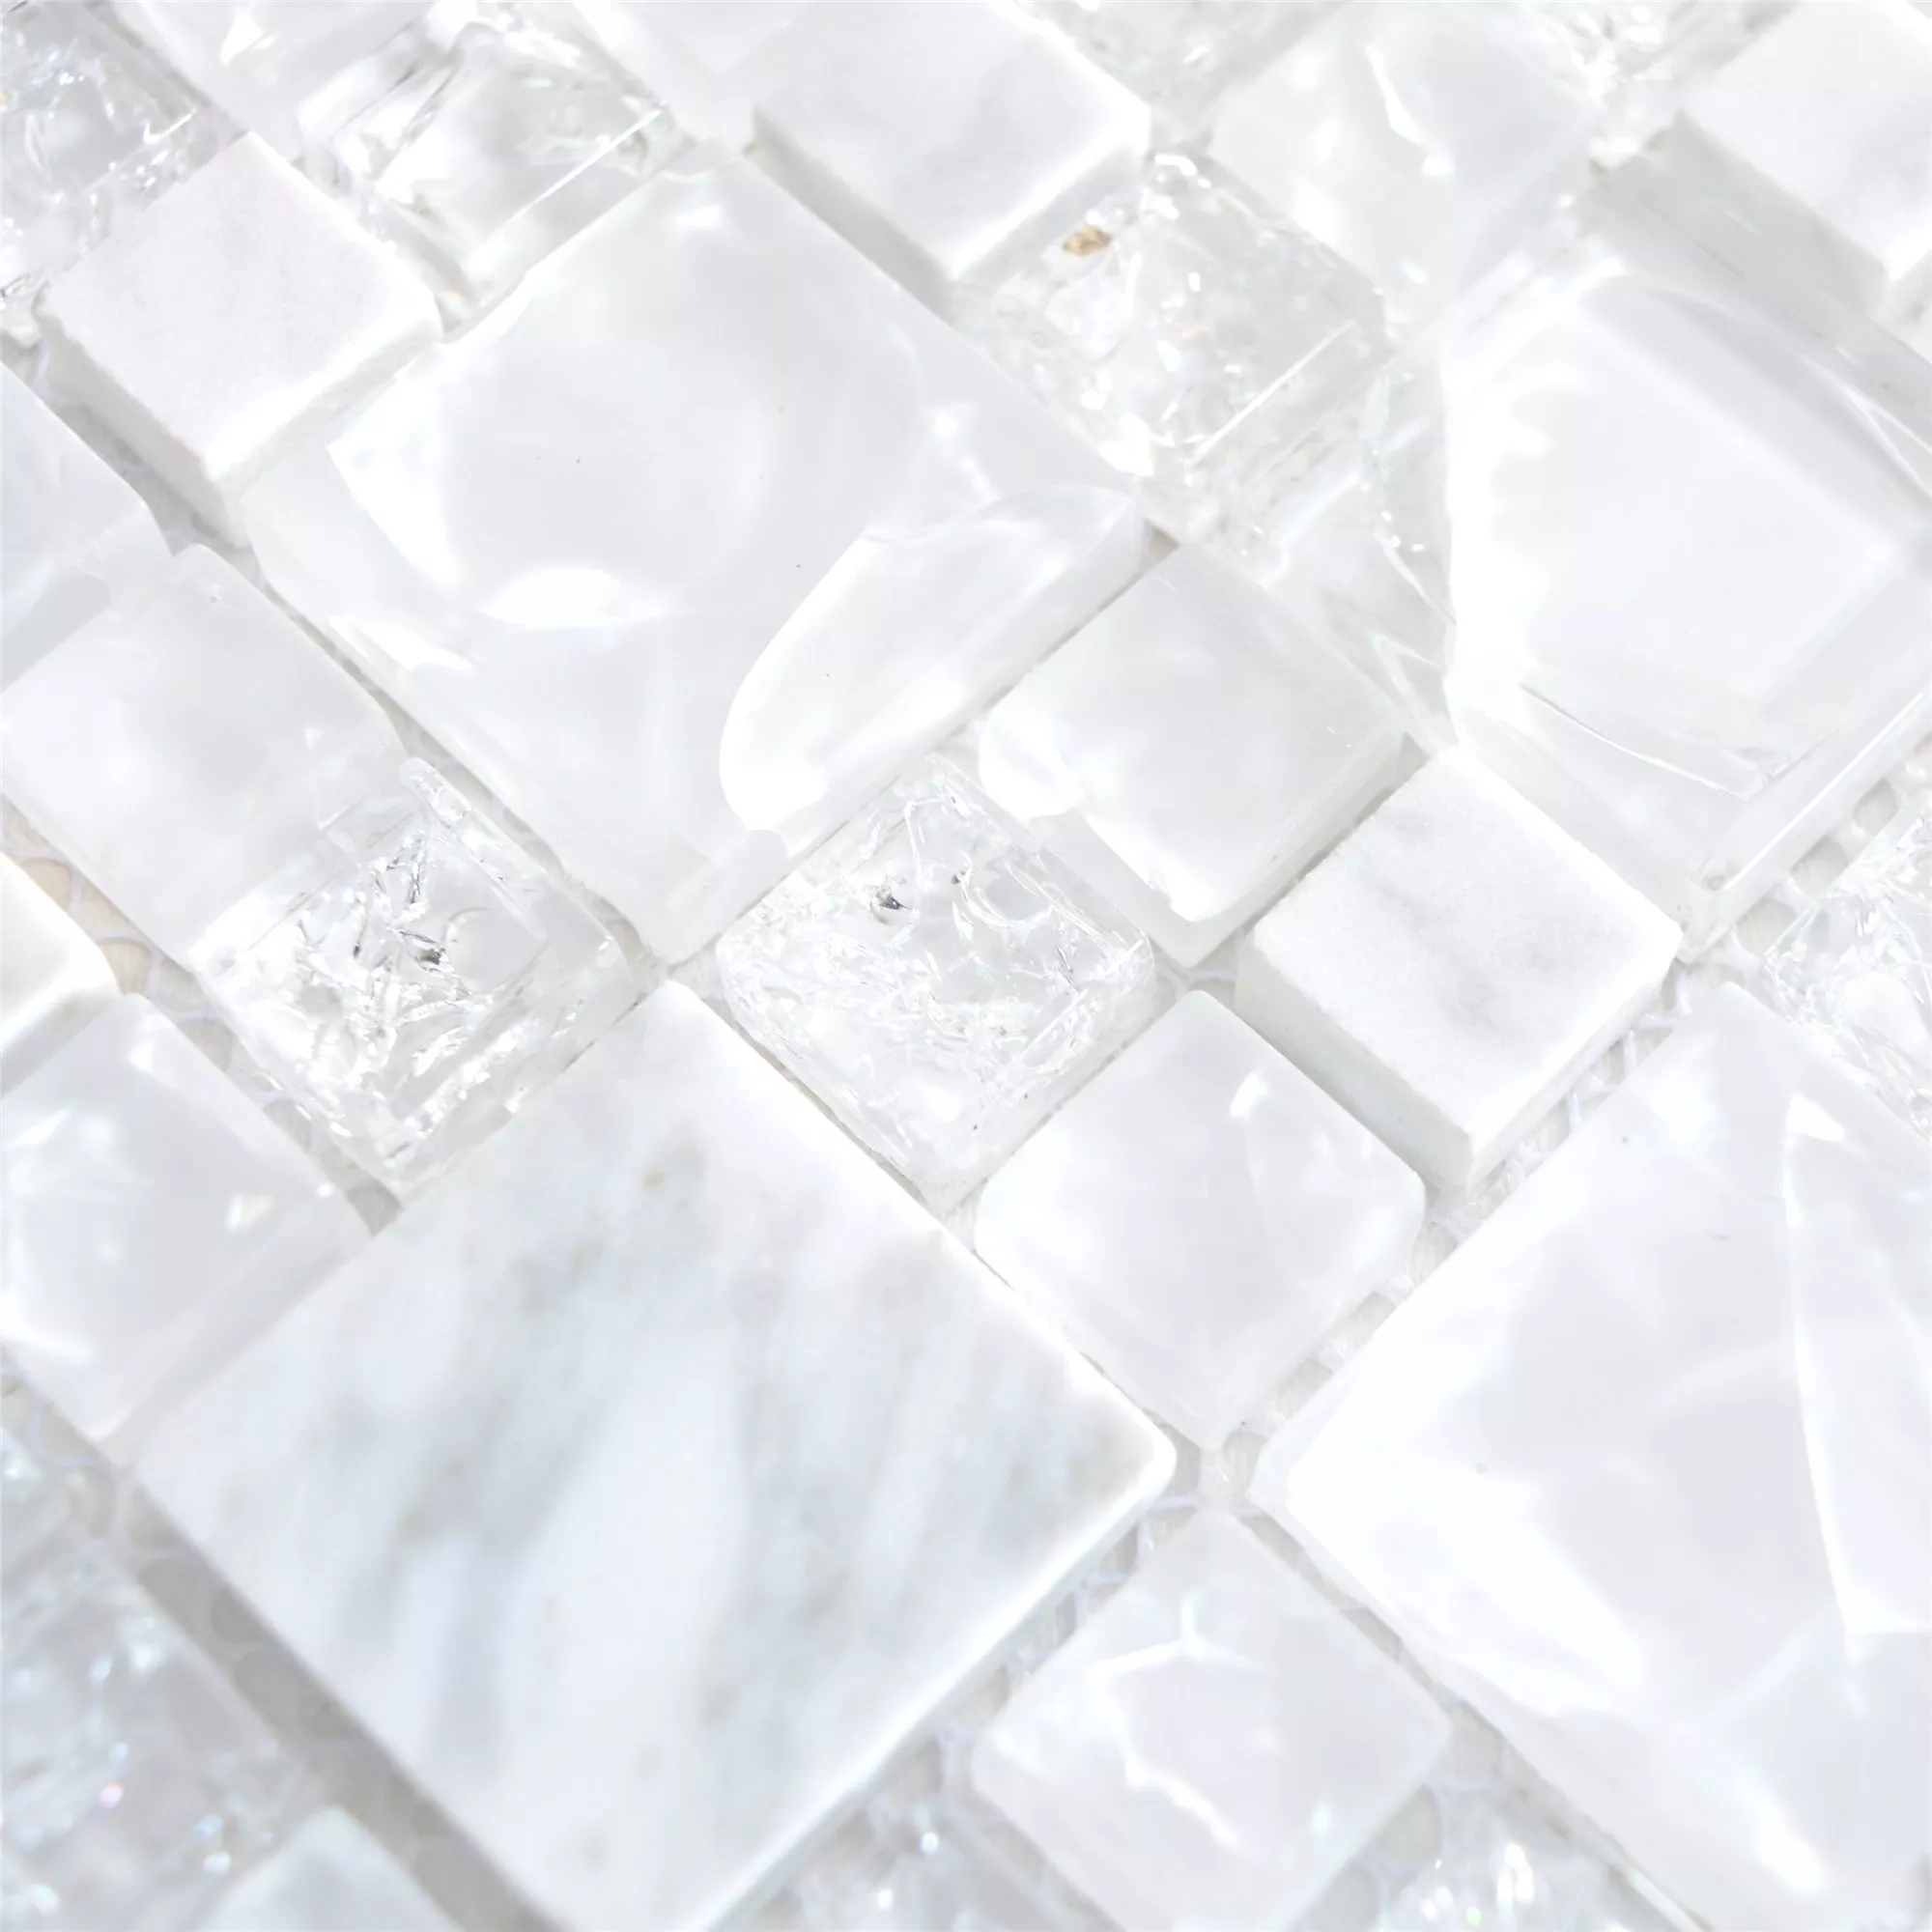 Sample Mosaic Tiles Glass Natural Stone Malawi White ix